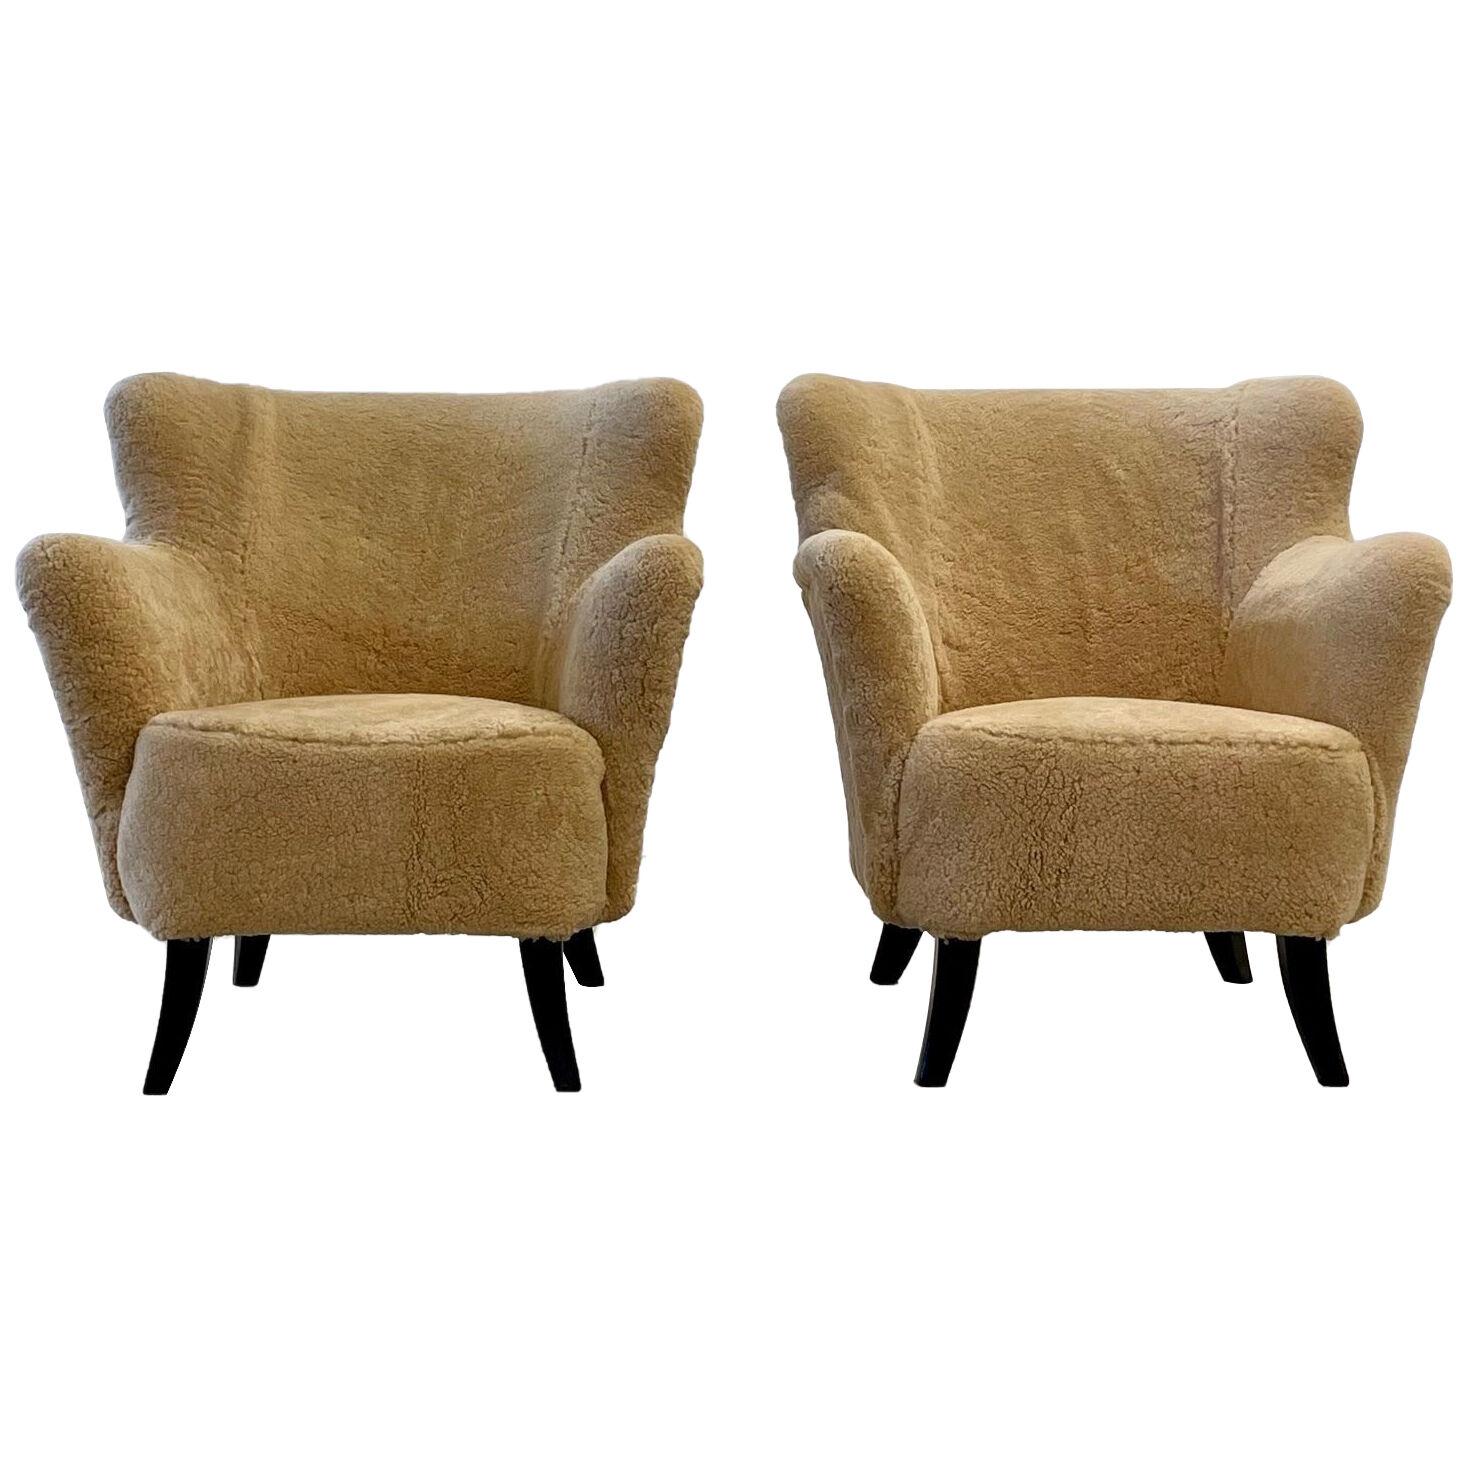 Pair Mid-Century Modern Danish Designer Organic Form Lounge Chairs, Sheepskin